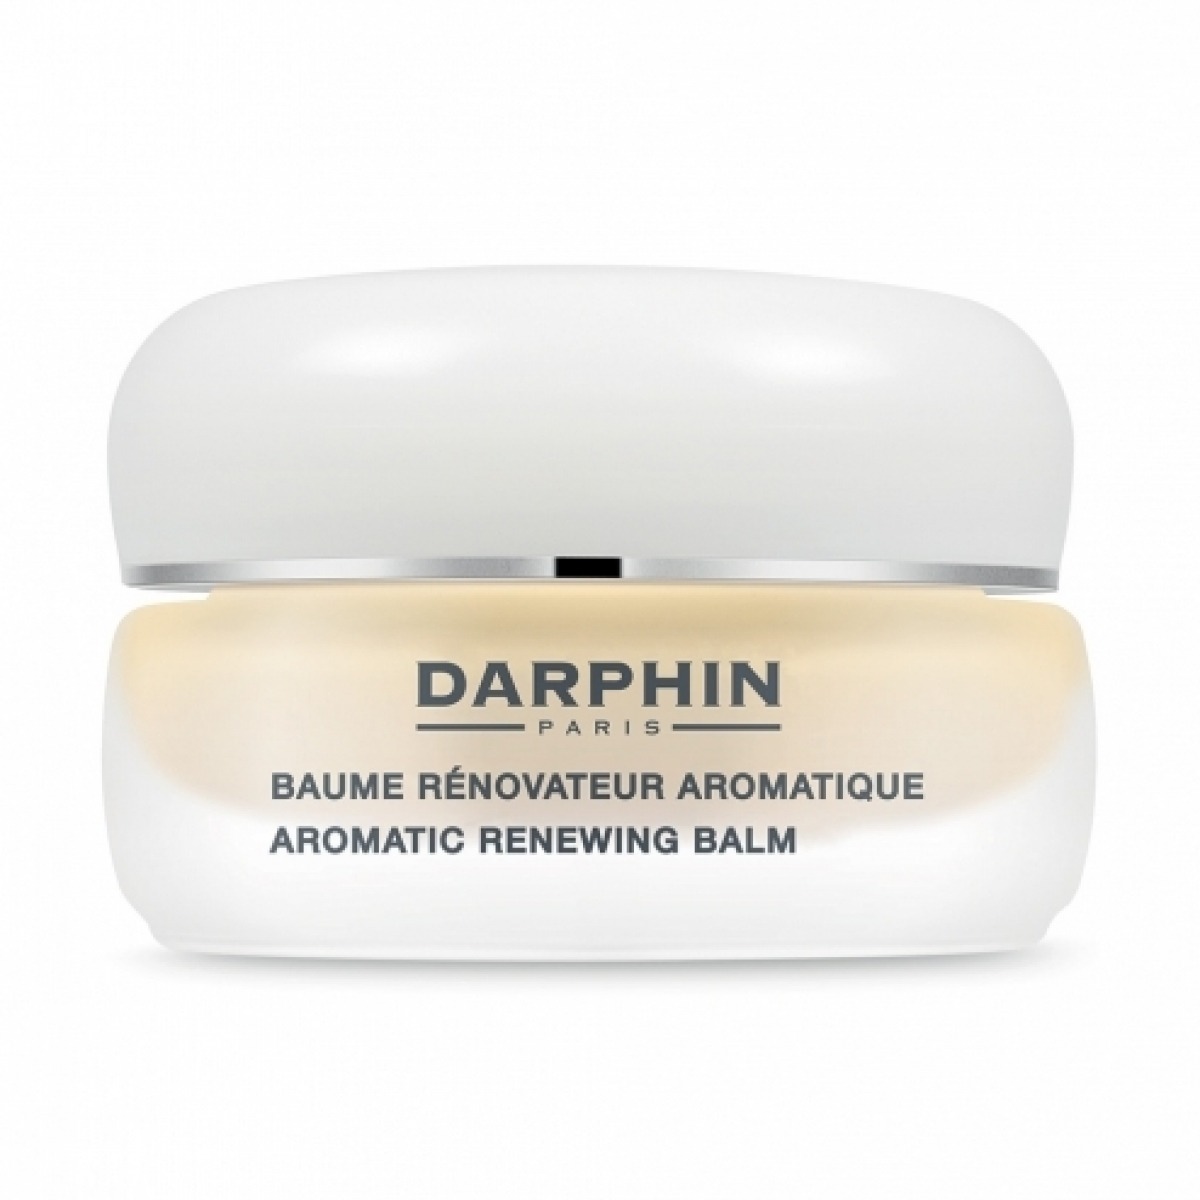 Darphin Baume Renovateur Aromatique 15ml